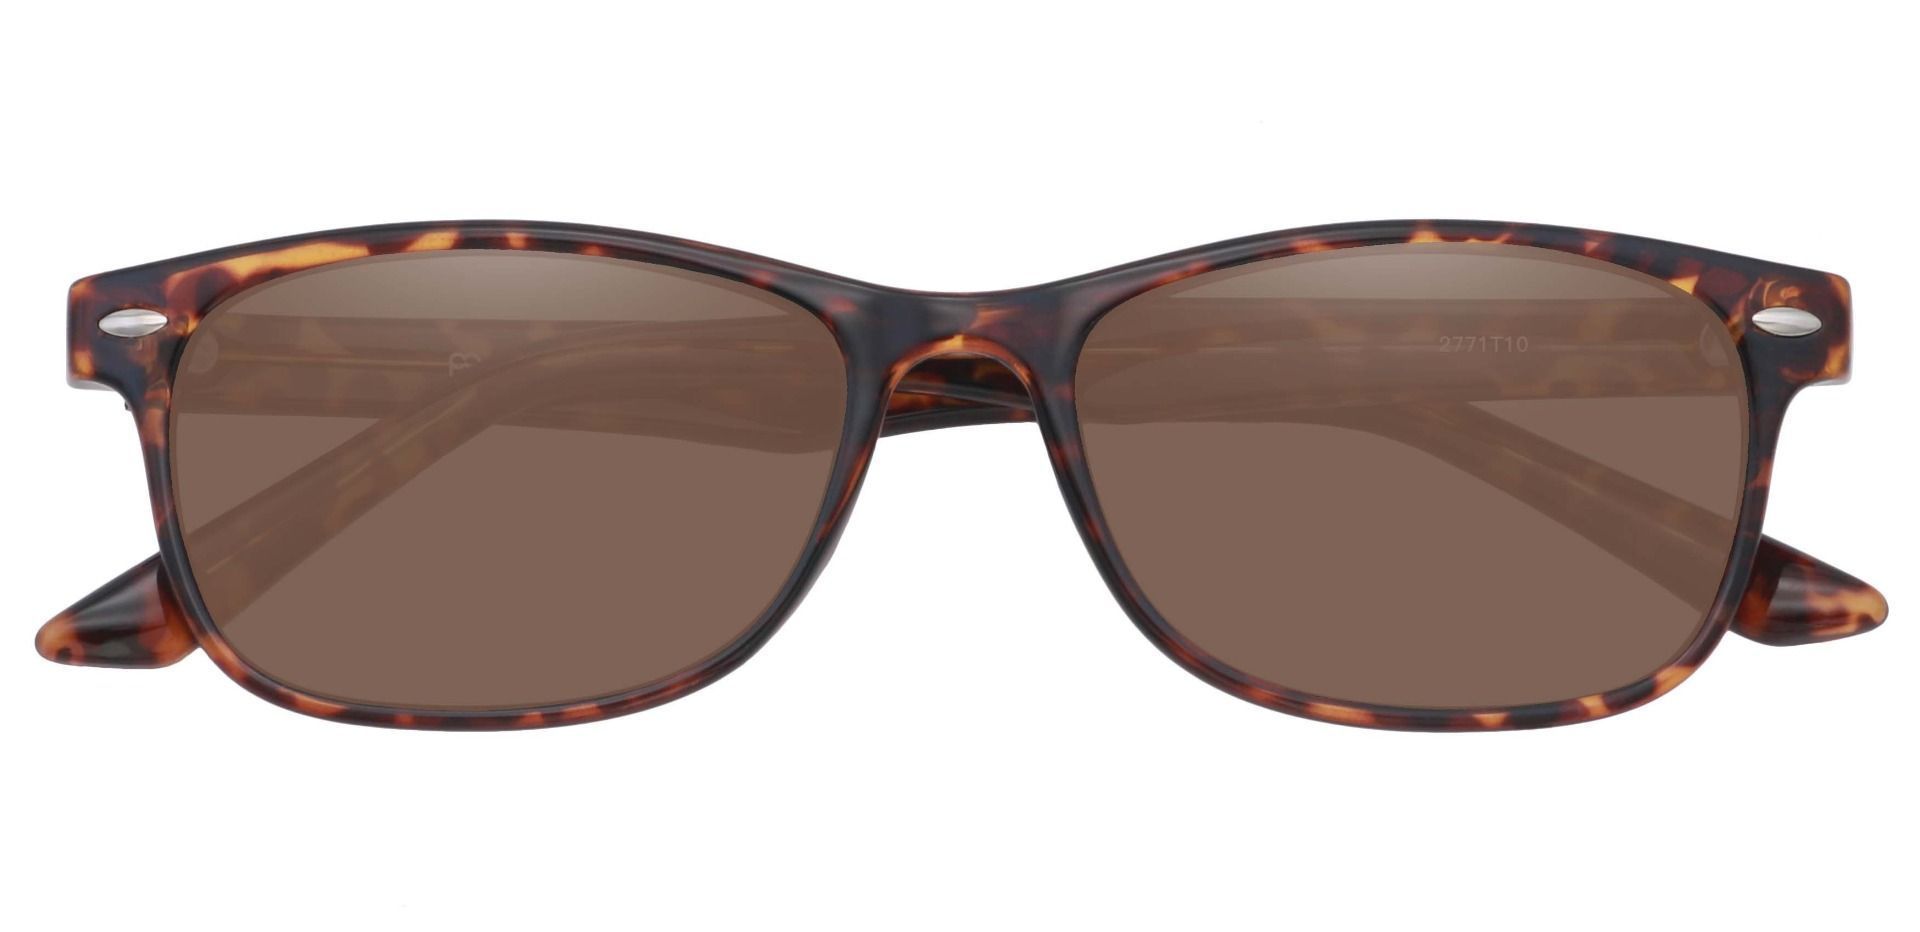 Village Rectangle Prescription Sunglasses - Tortoise Frame With Brown Lenses